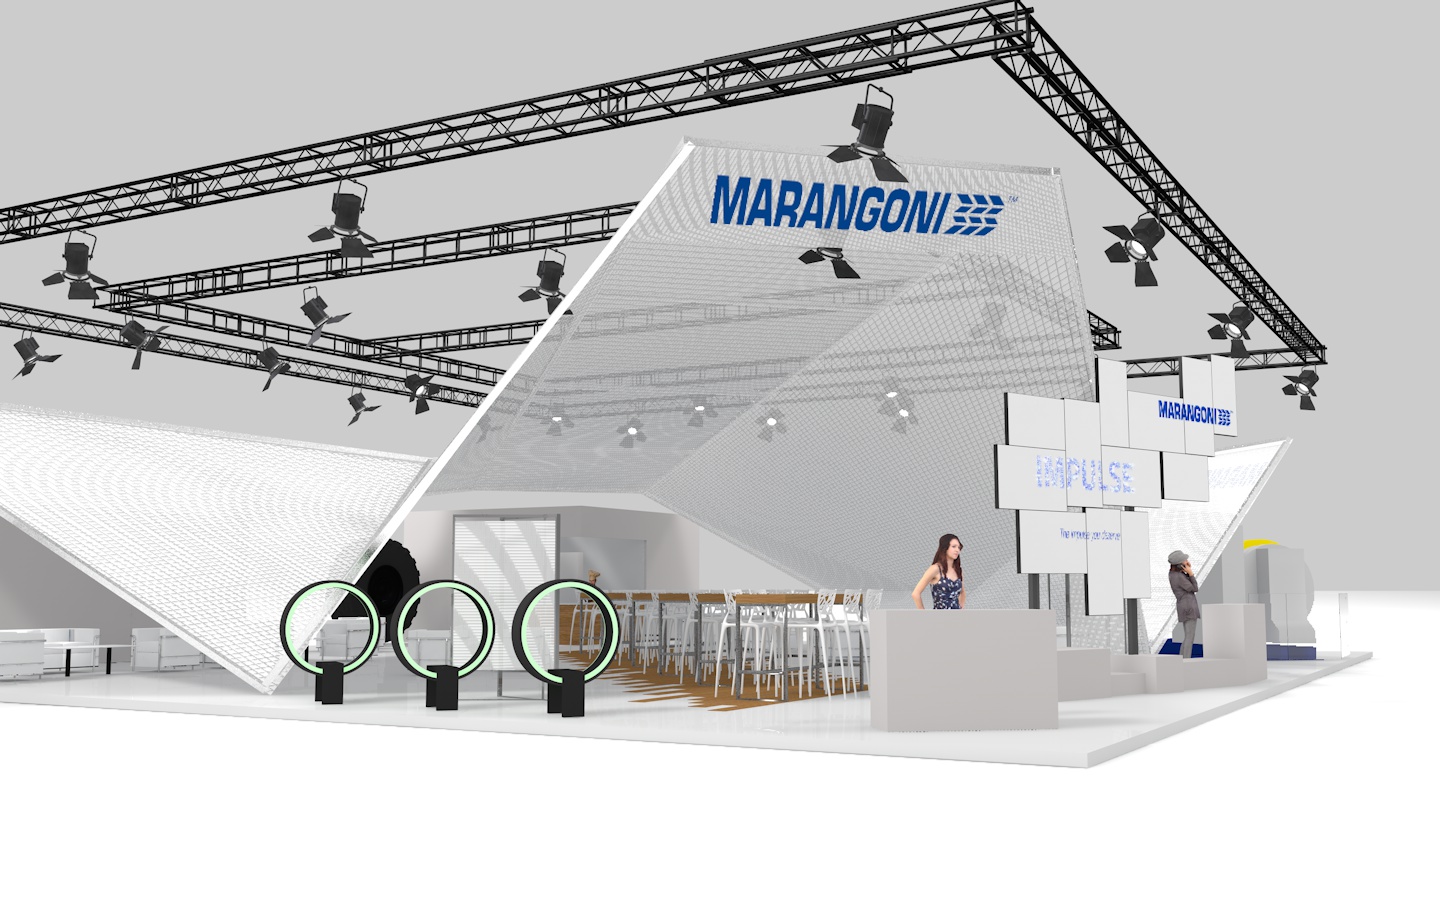 Marangoni focusing on Retreading Systems business at Reifen 2016